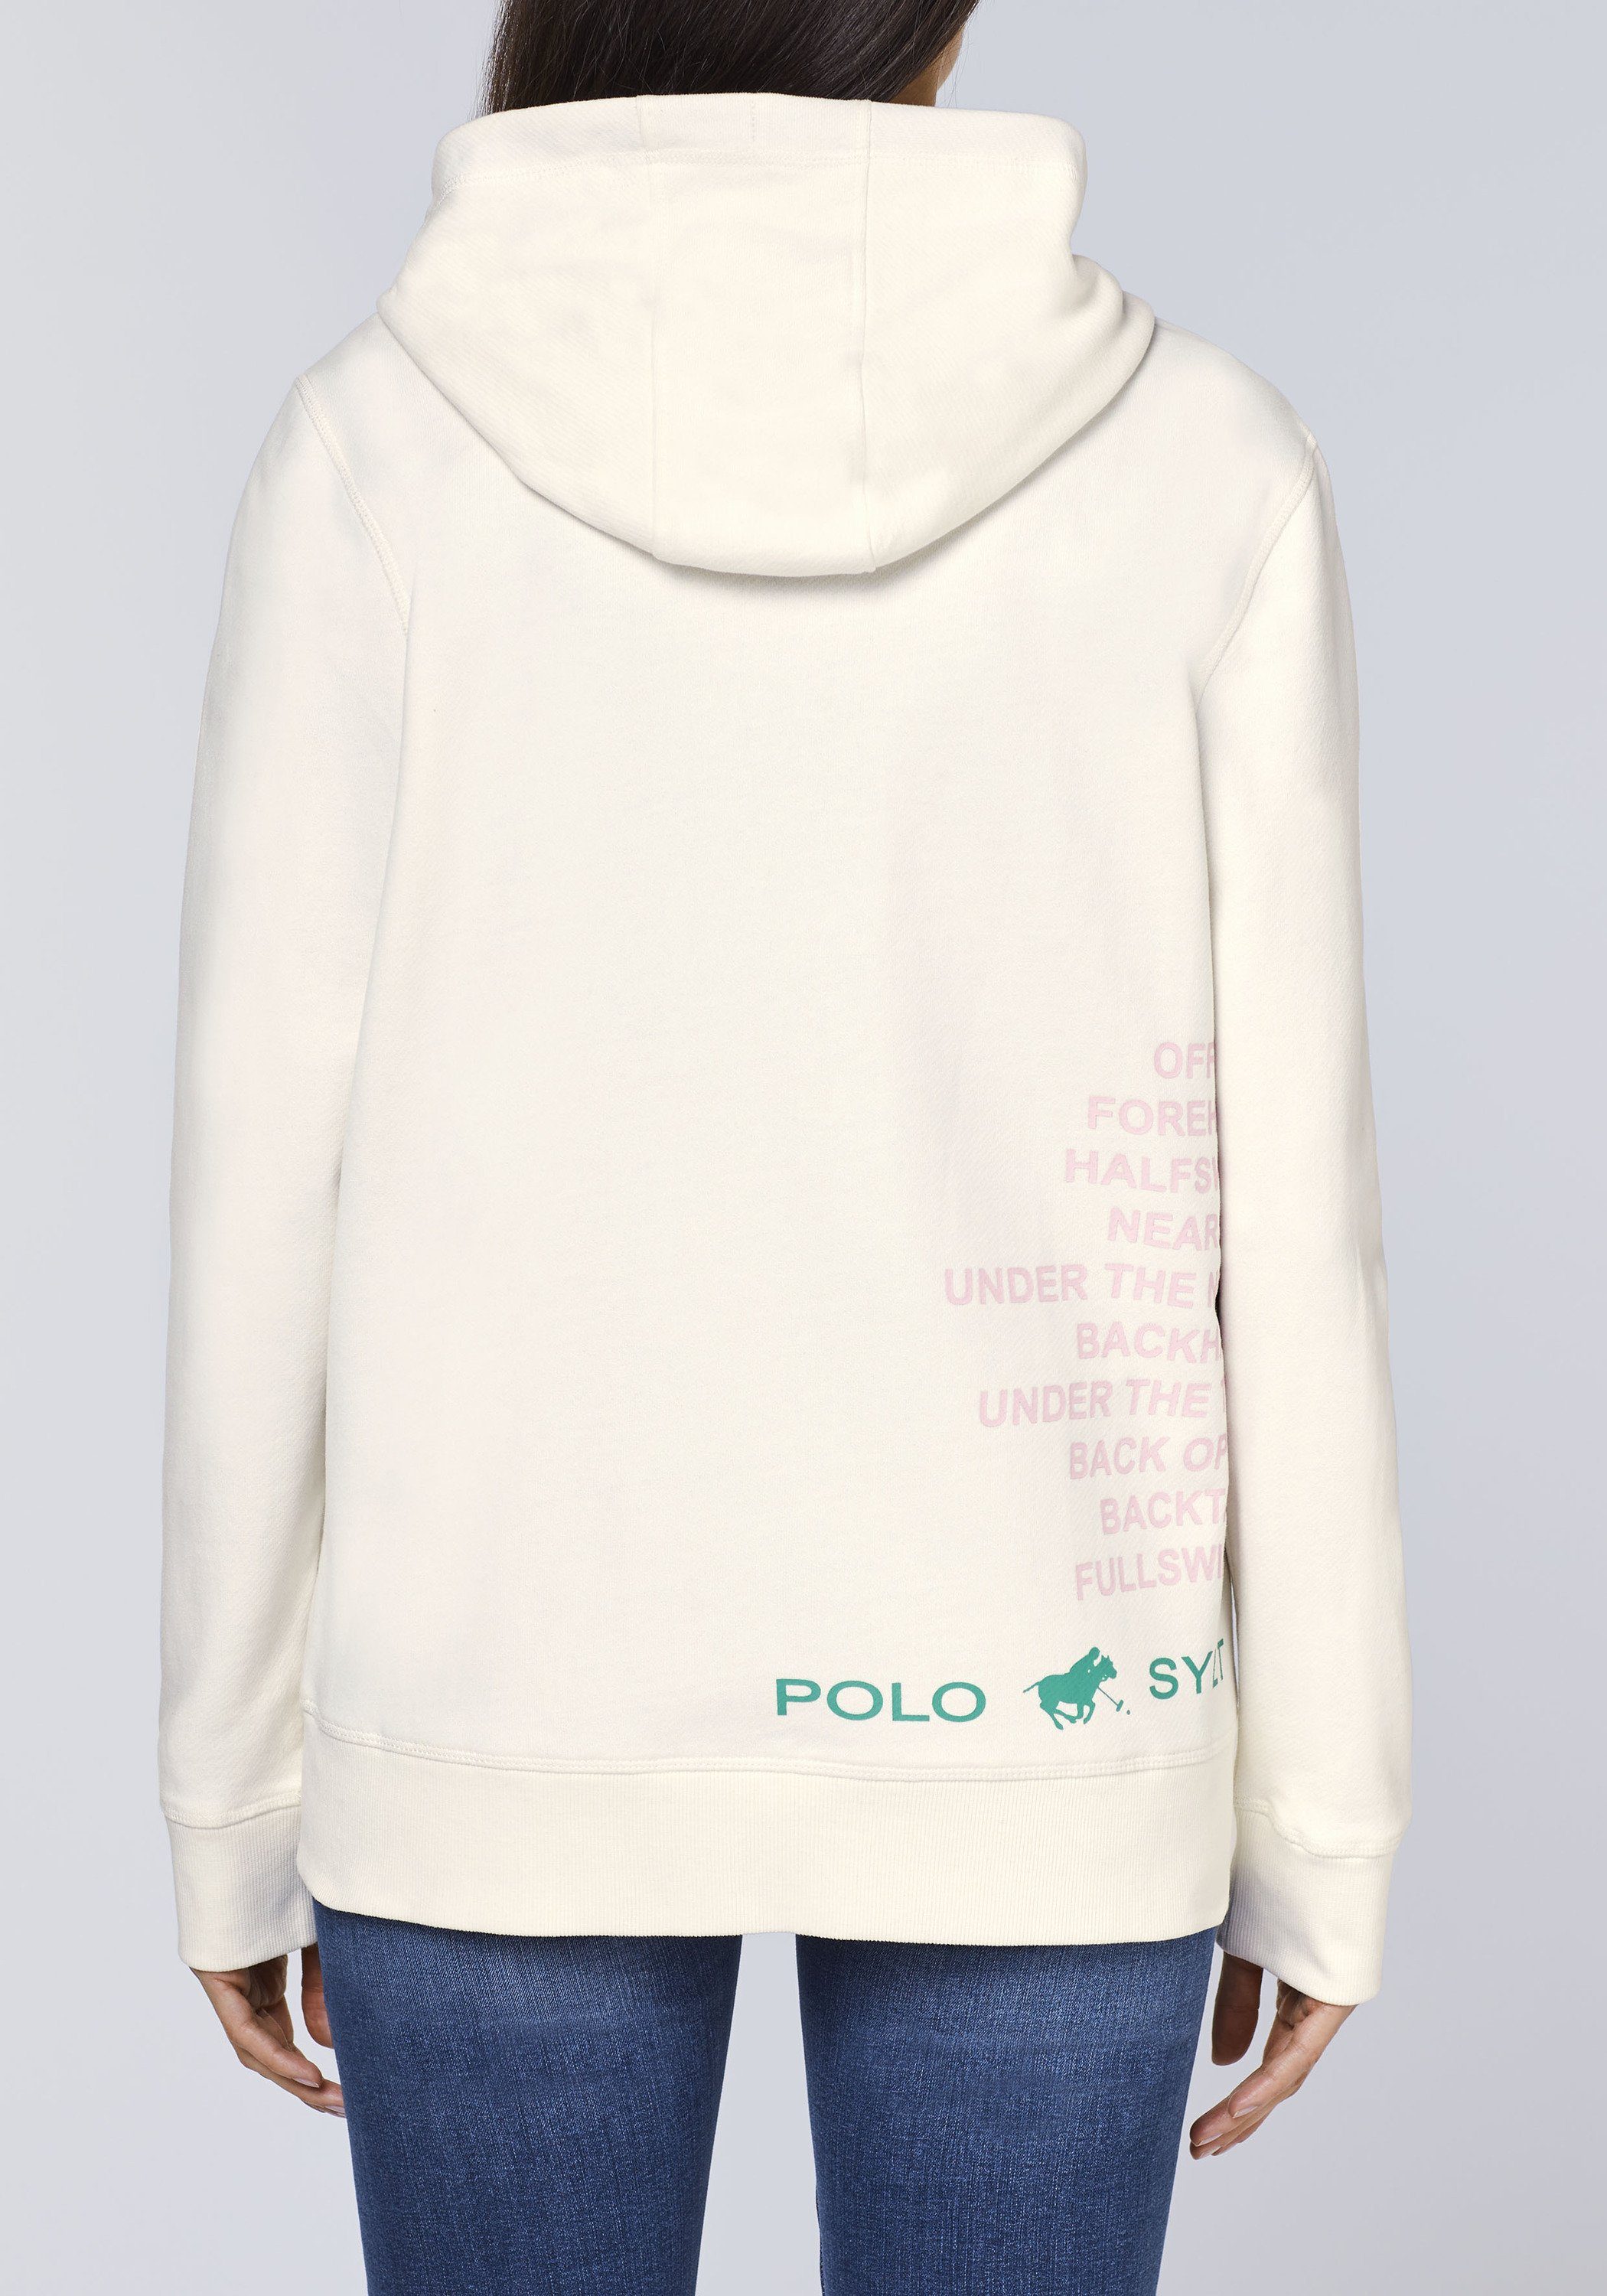 Polo Sylt Sweatjacke aus softer Baumwollmischung 11-4300 Marshmallow